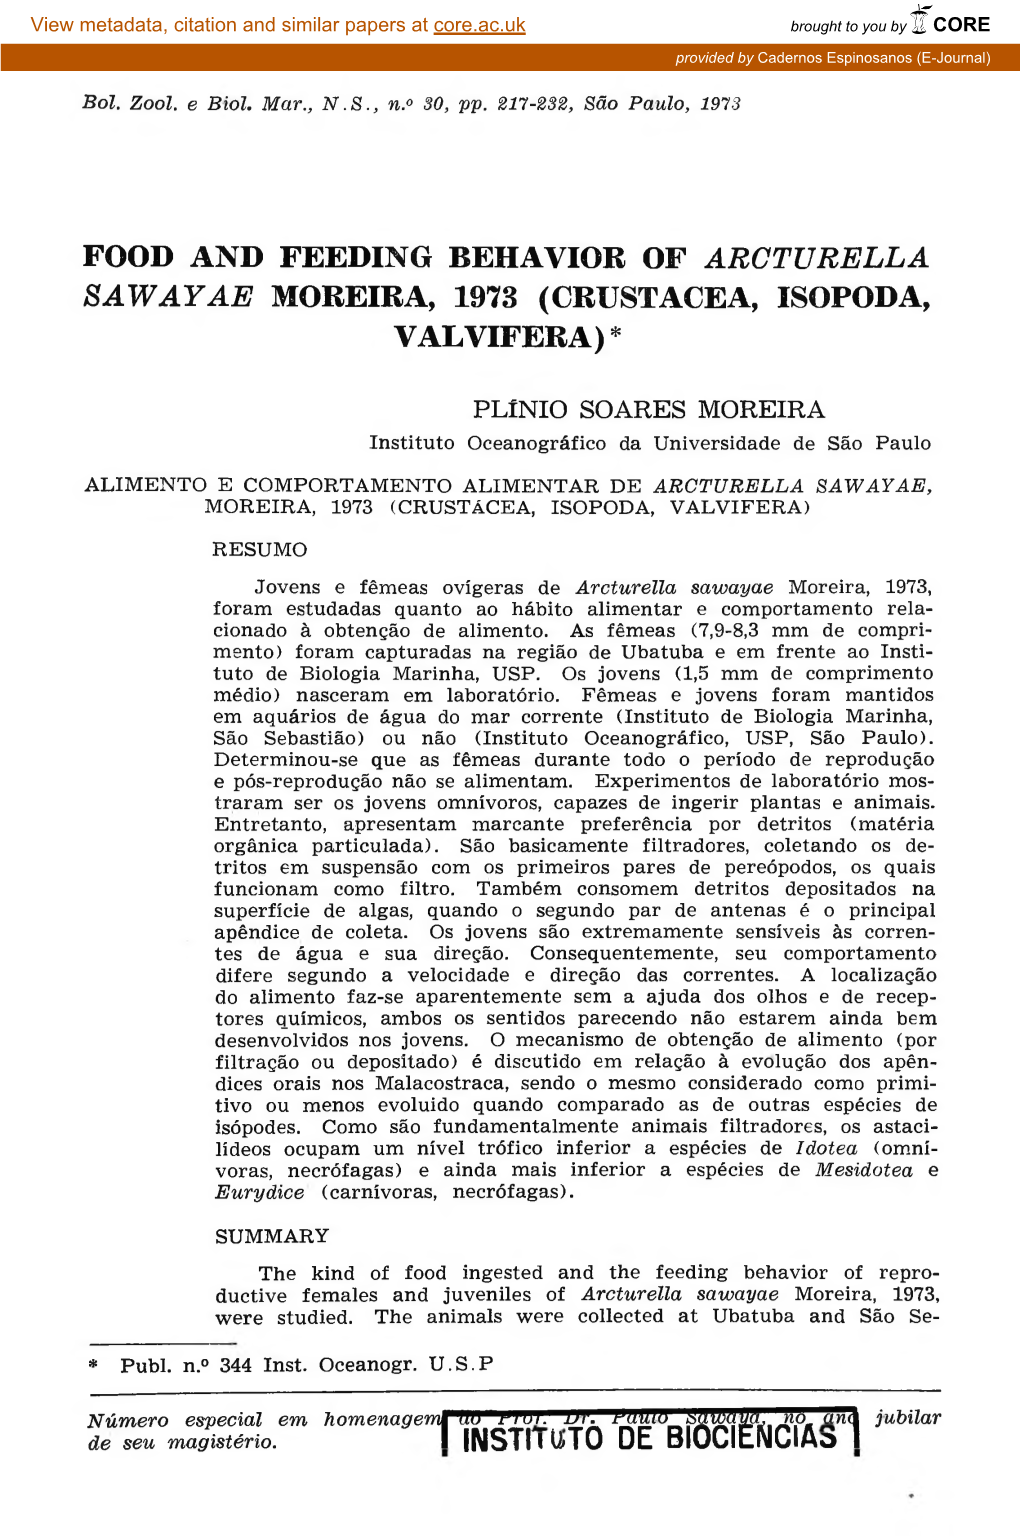 Food and Feeding Behavior of Arcturella Sawayae Moreira, 1973 (Crustacea, Isopoda, Valvifera)*